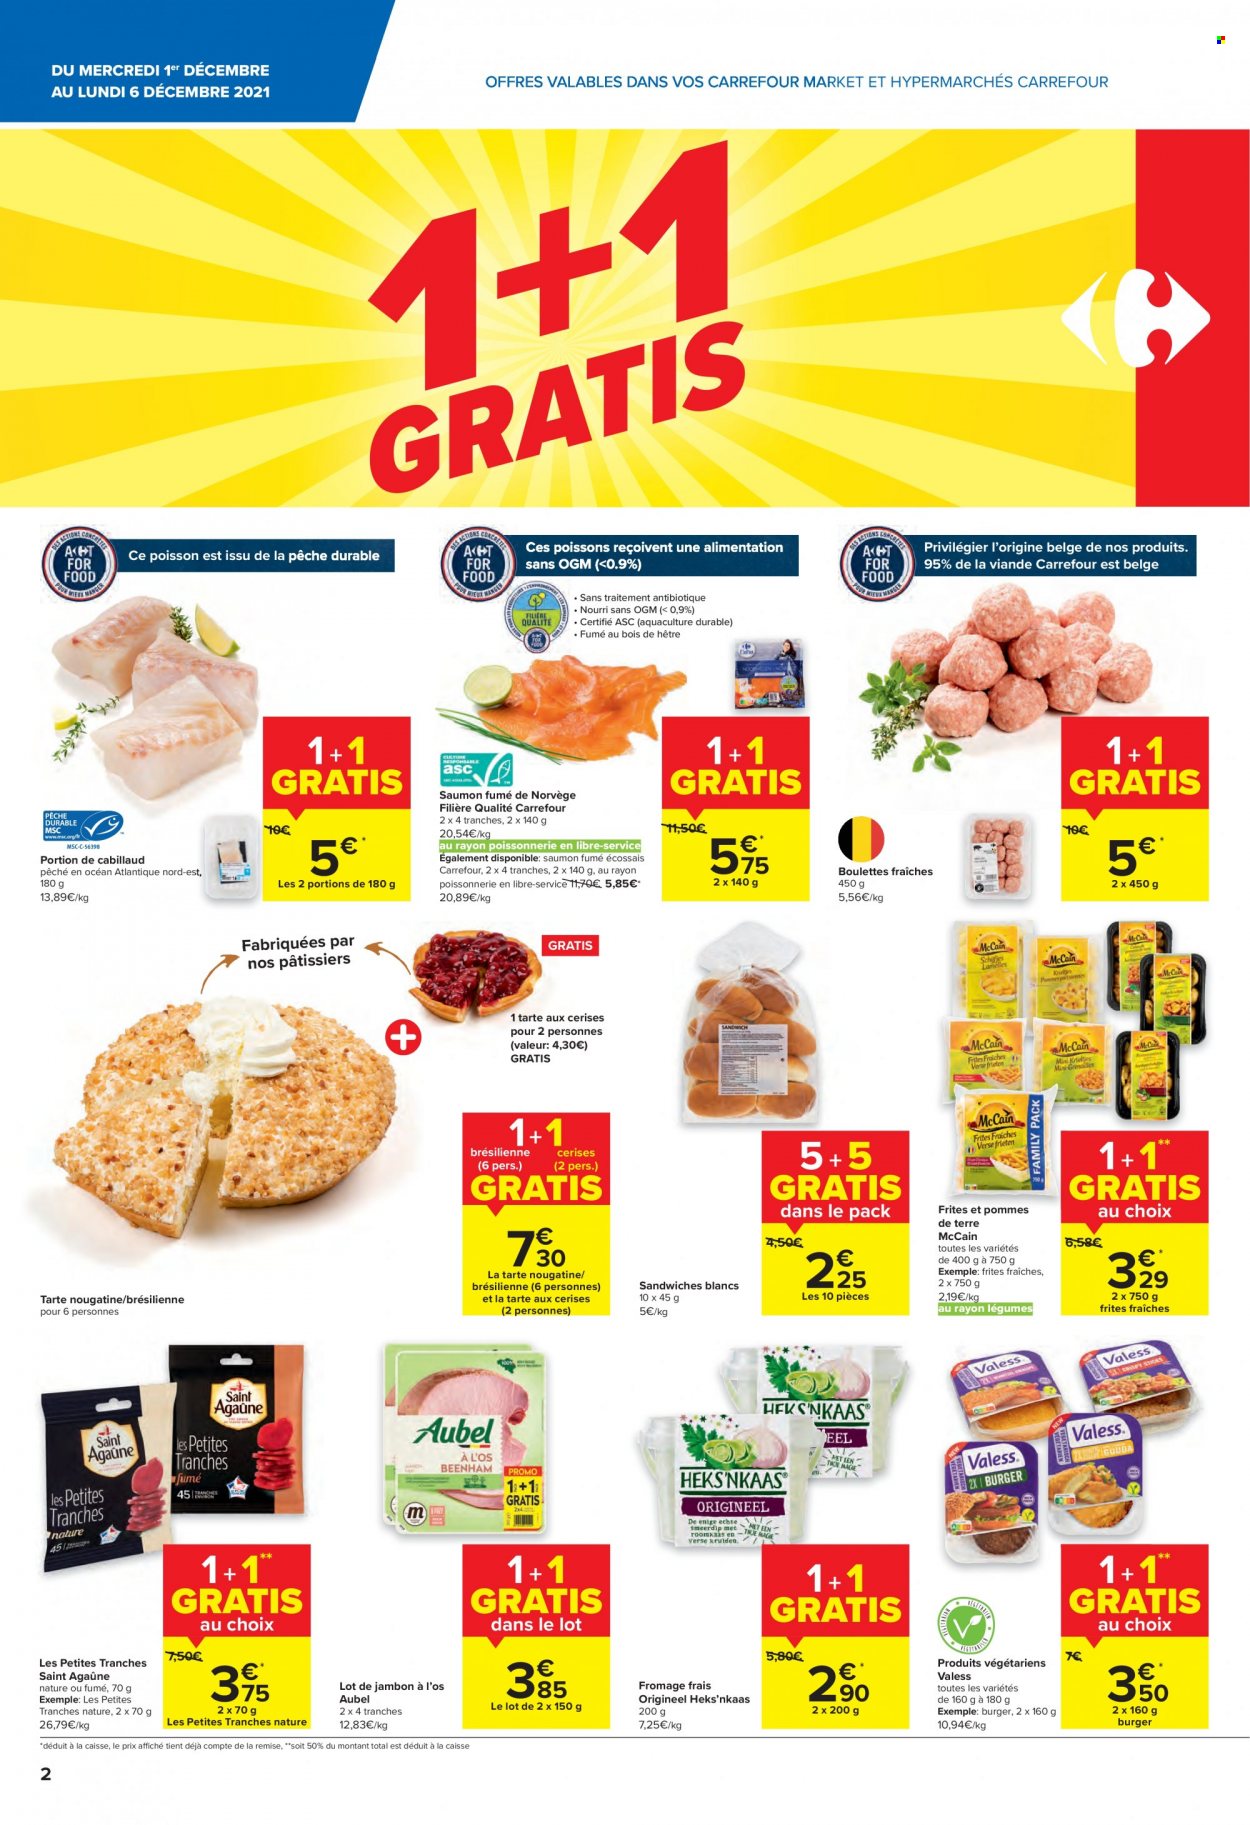 thumbnail - Carrefour-aanbieding - 01/12/2021 - 06/12/2021 -  producten in de aanbieding - Heks'nkaas, McCain, frites. Pagina 2.